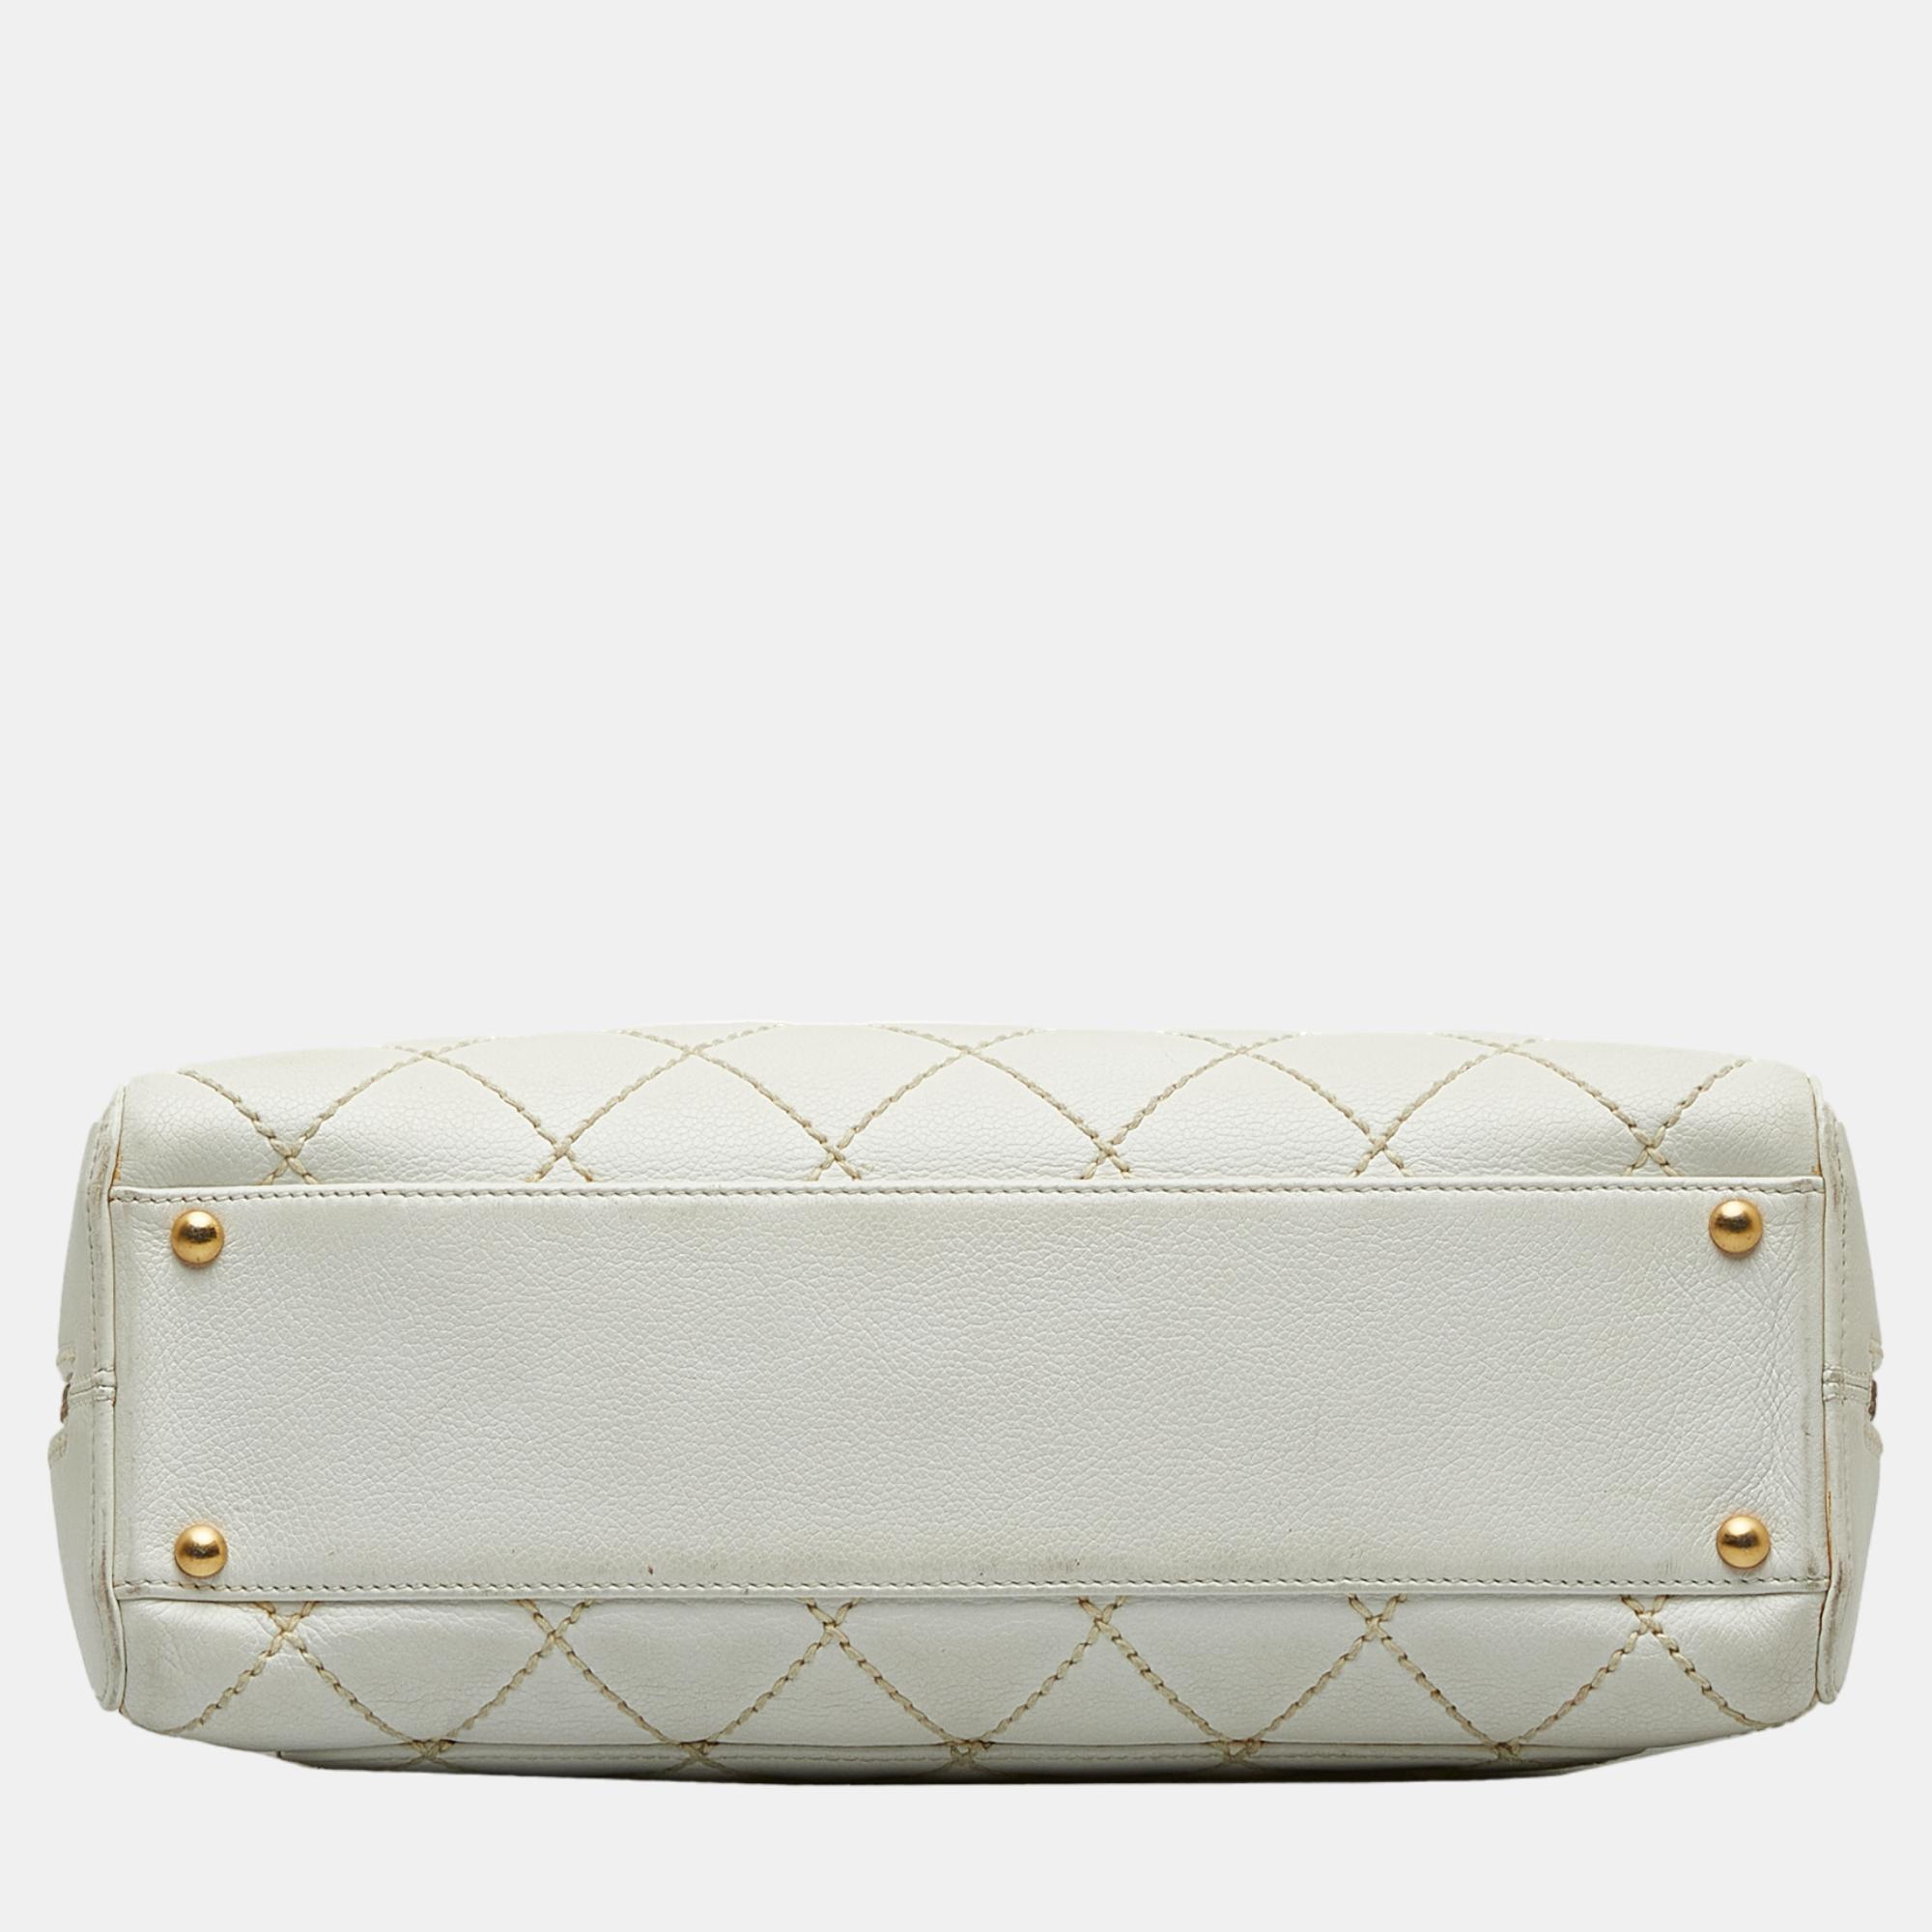 Chanel White CC Wild Stitch Handbag